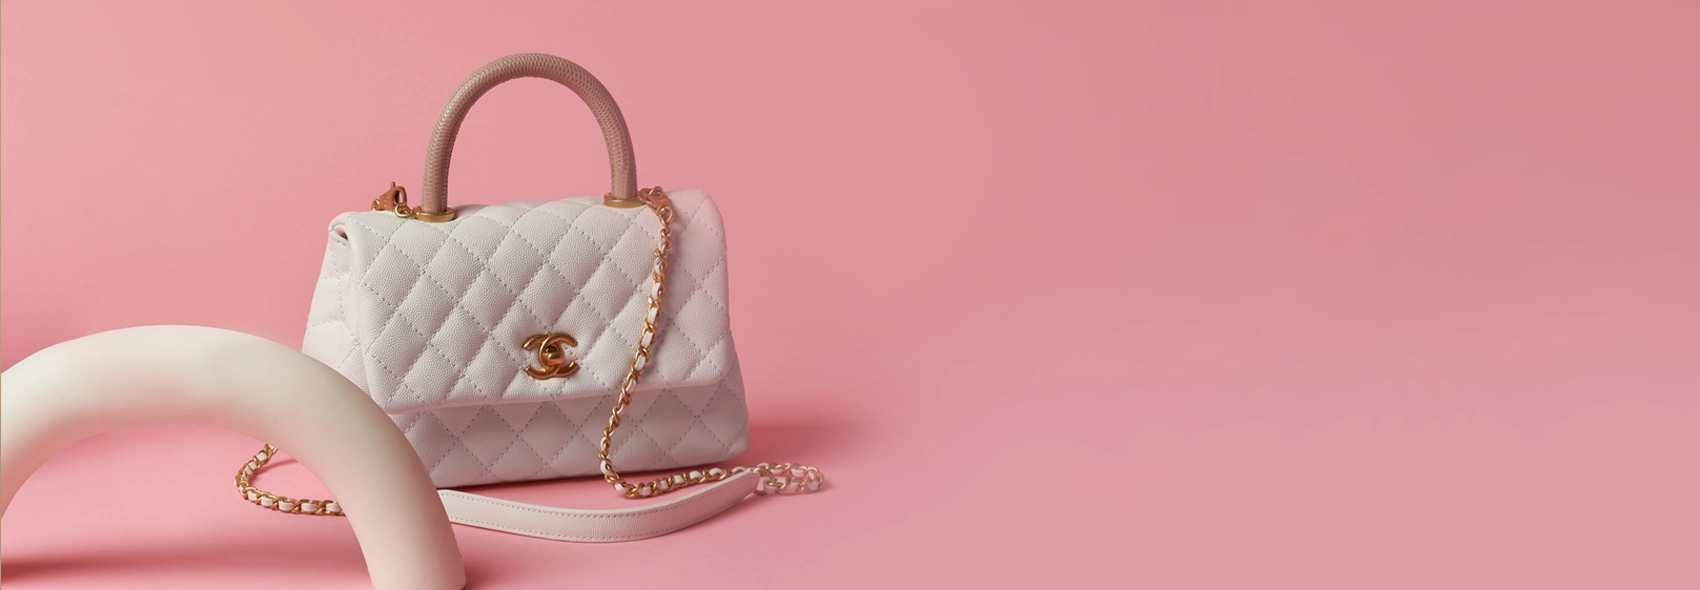 Chanel Handbags for Every Budget